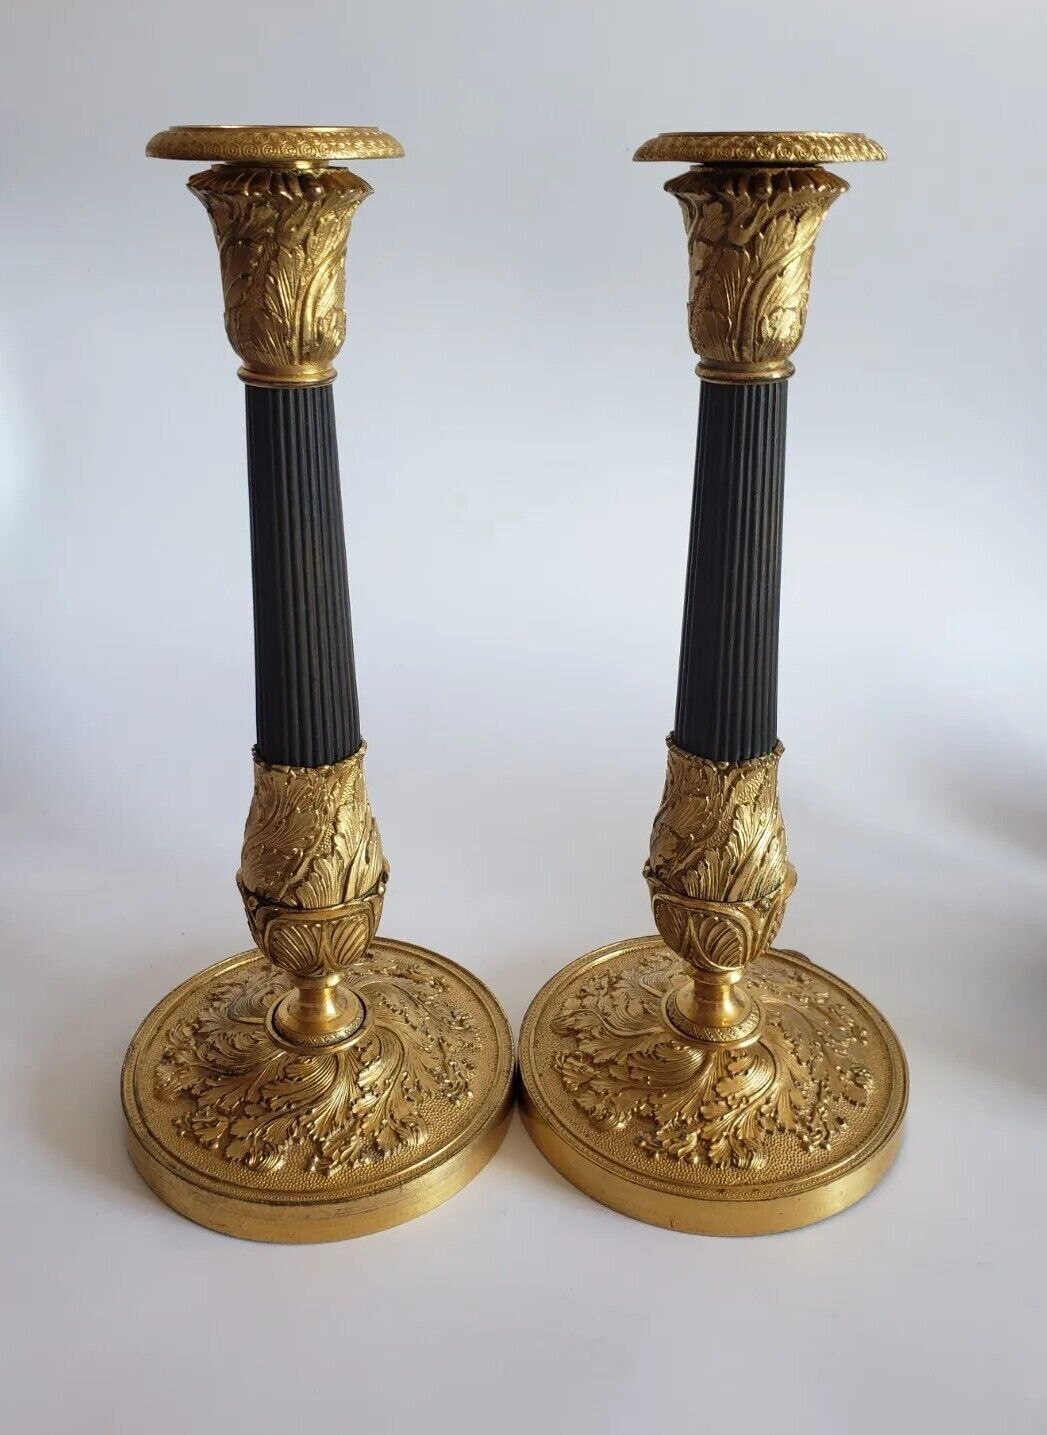 Pair of Antique 19th C. ( 1800 - 1849 ) French Empire Gilt Bronze Candlesticks.